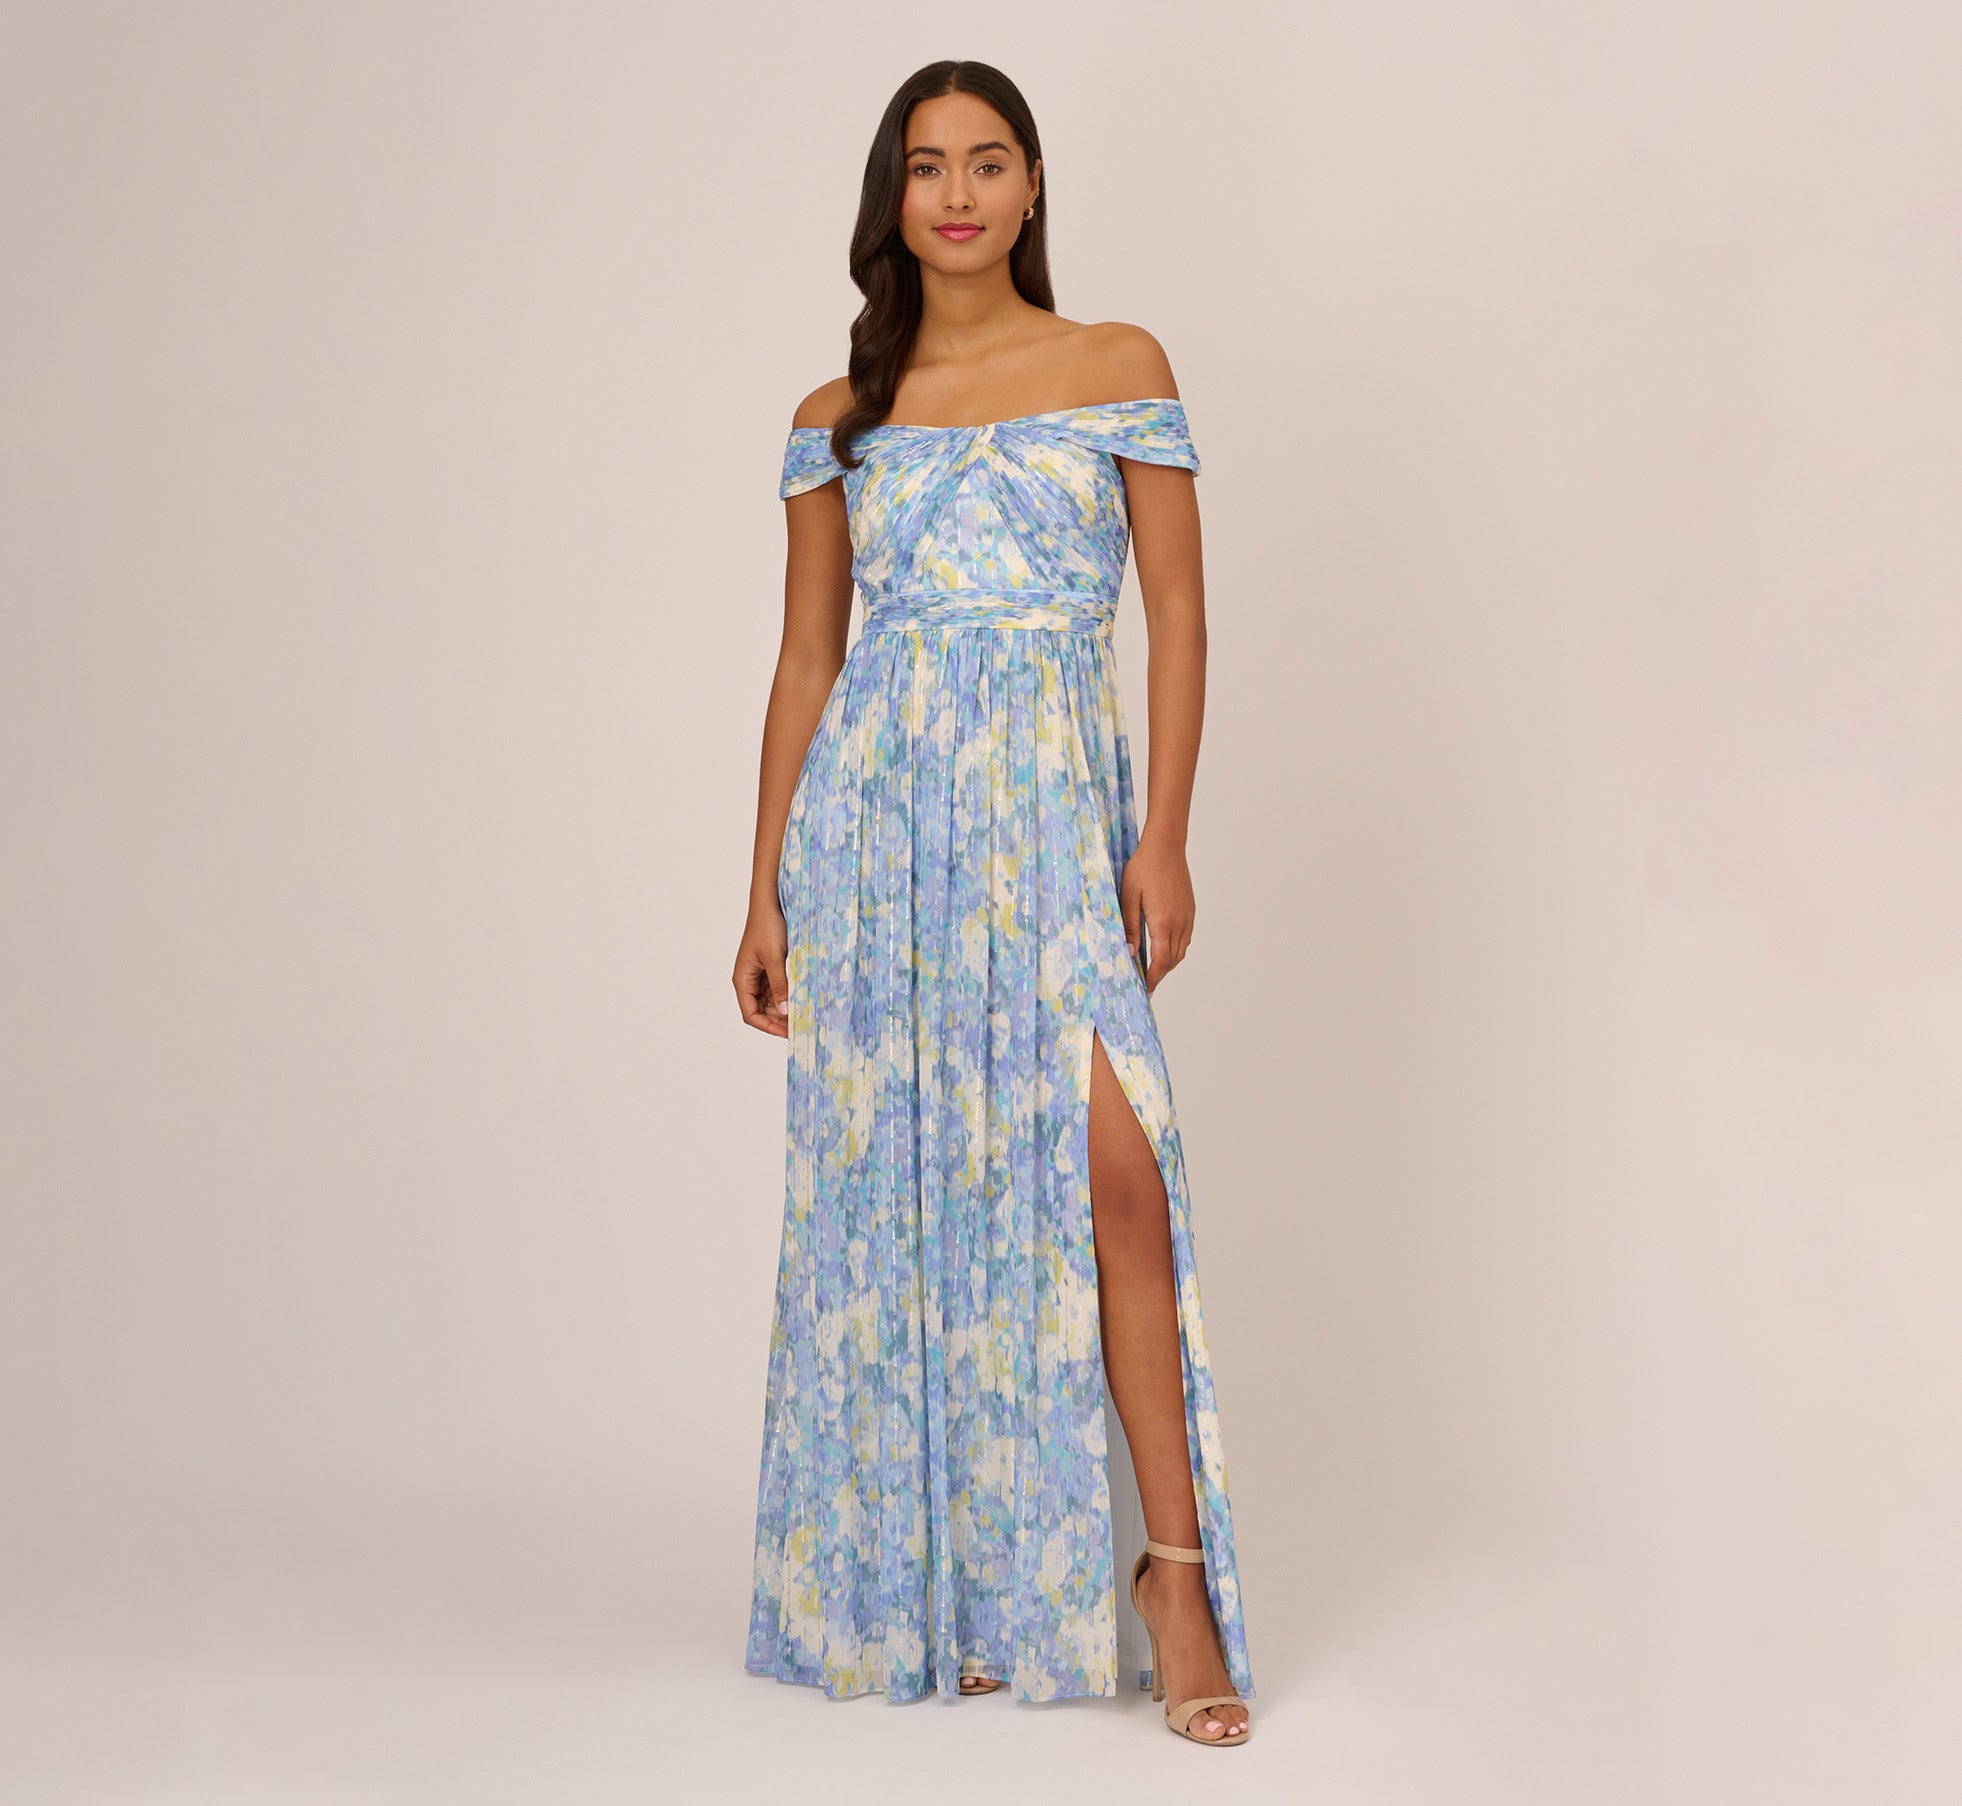 Cream and Blue Floral Print Dress - Wrap Dress - Maxi Dress - Lulus